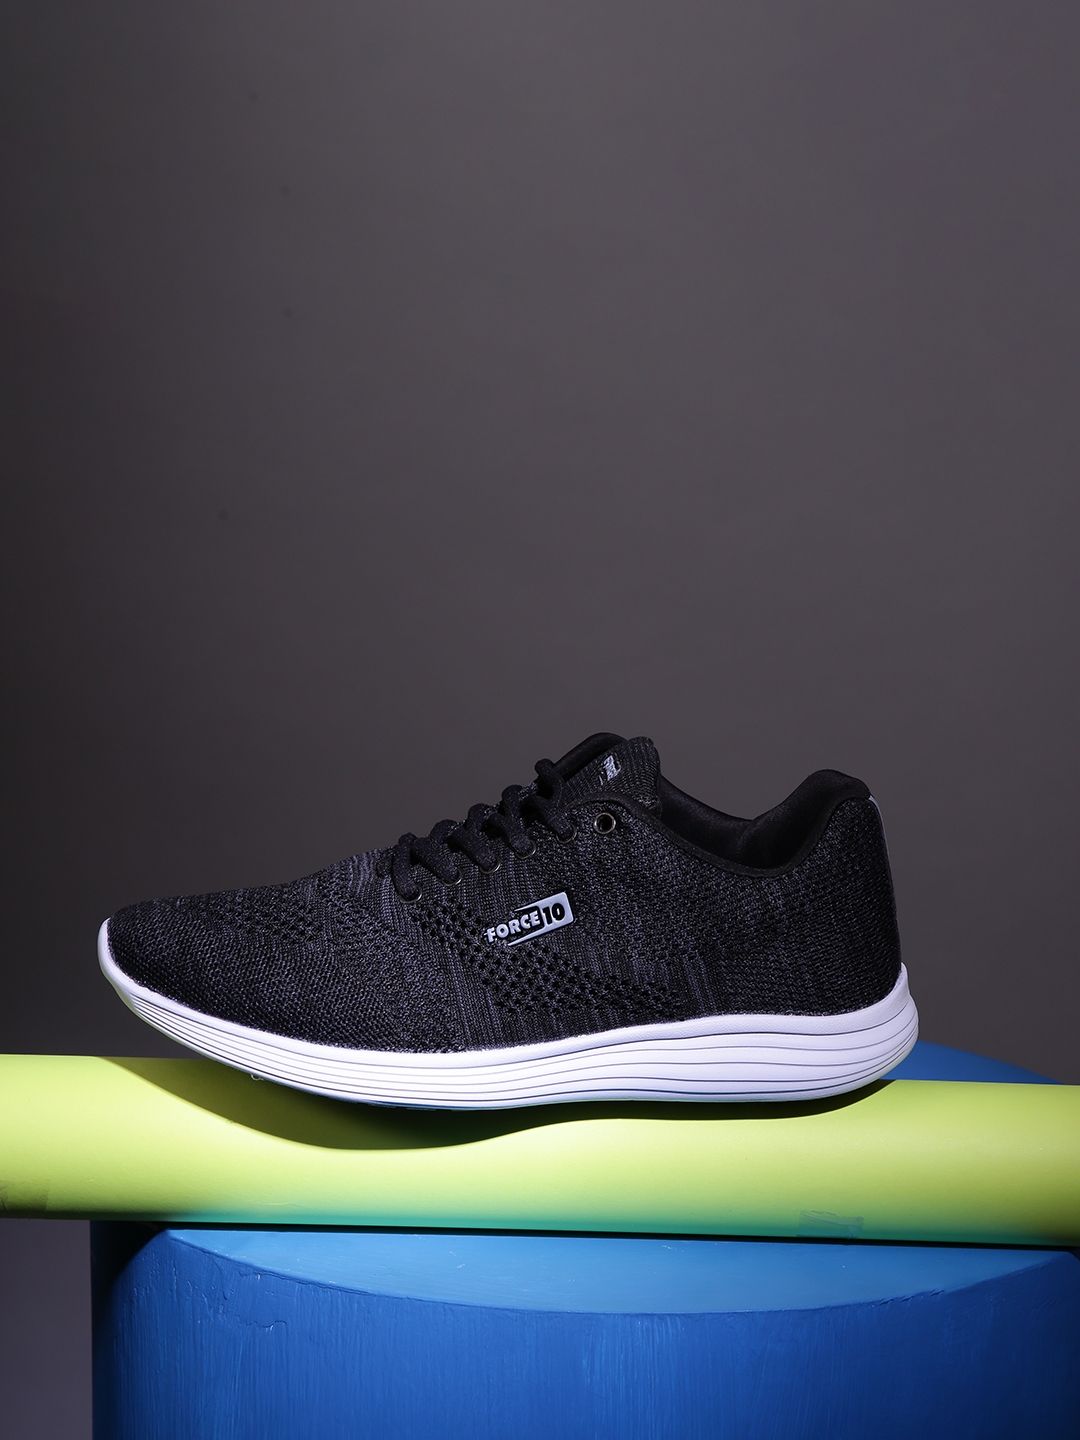 Liberty | Men'S Force 10 Black Running Shoes